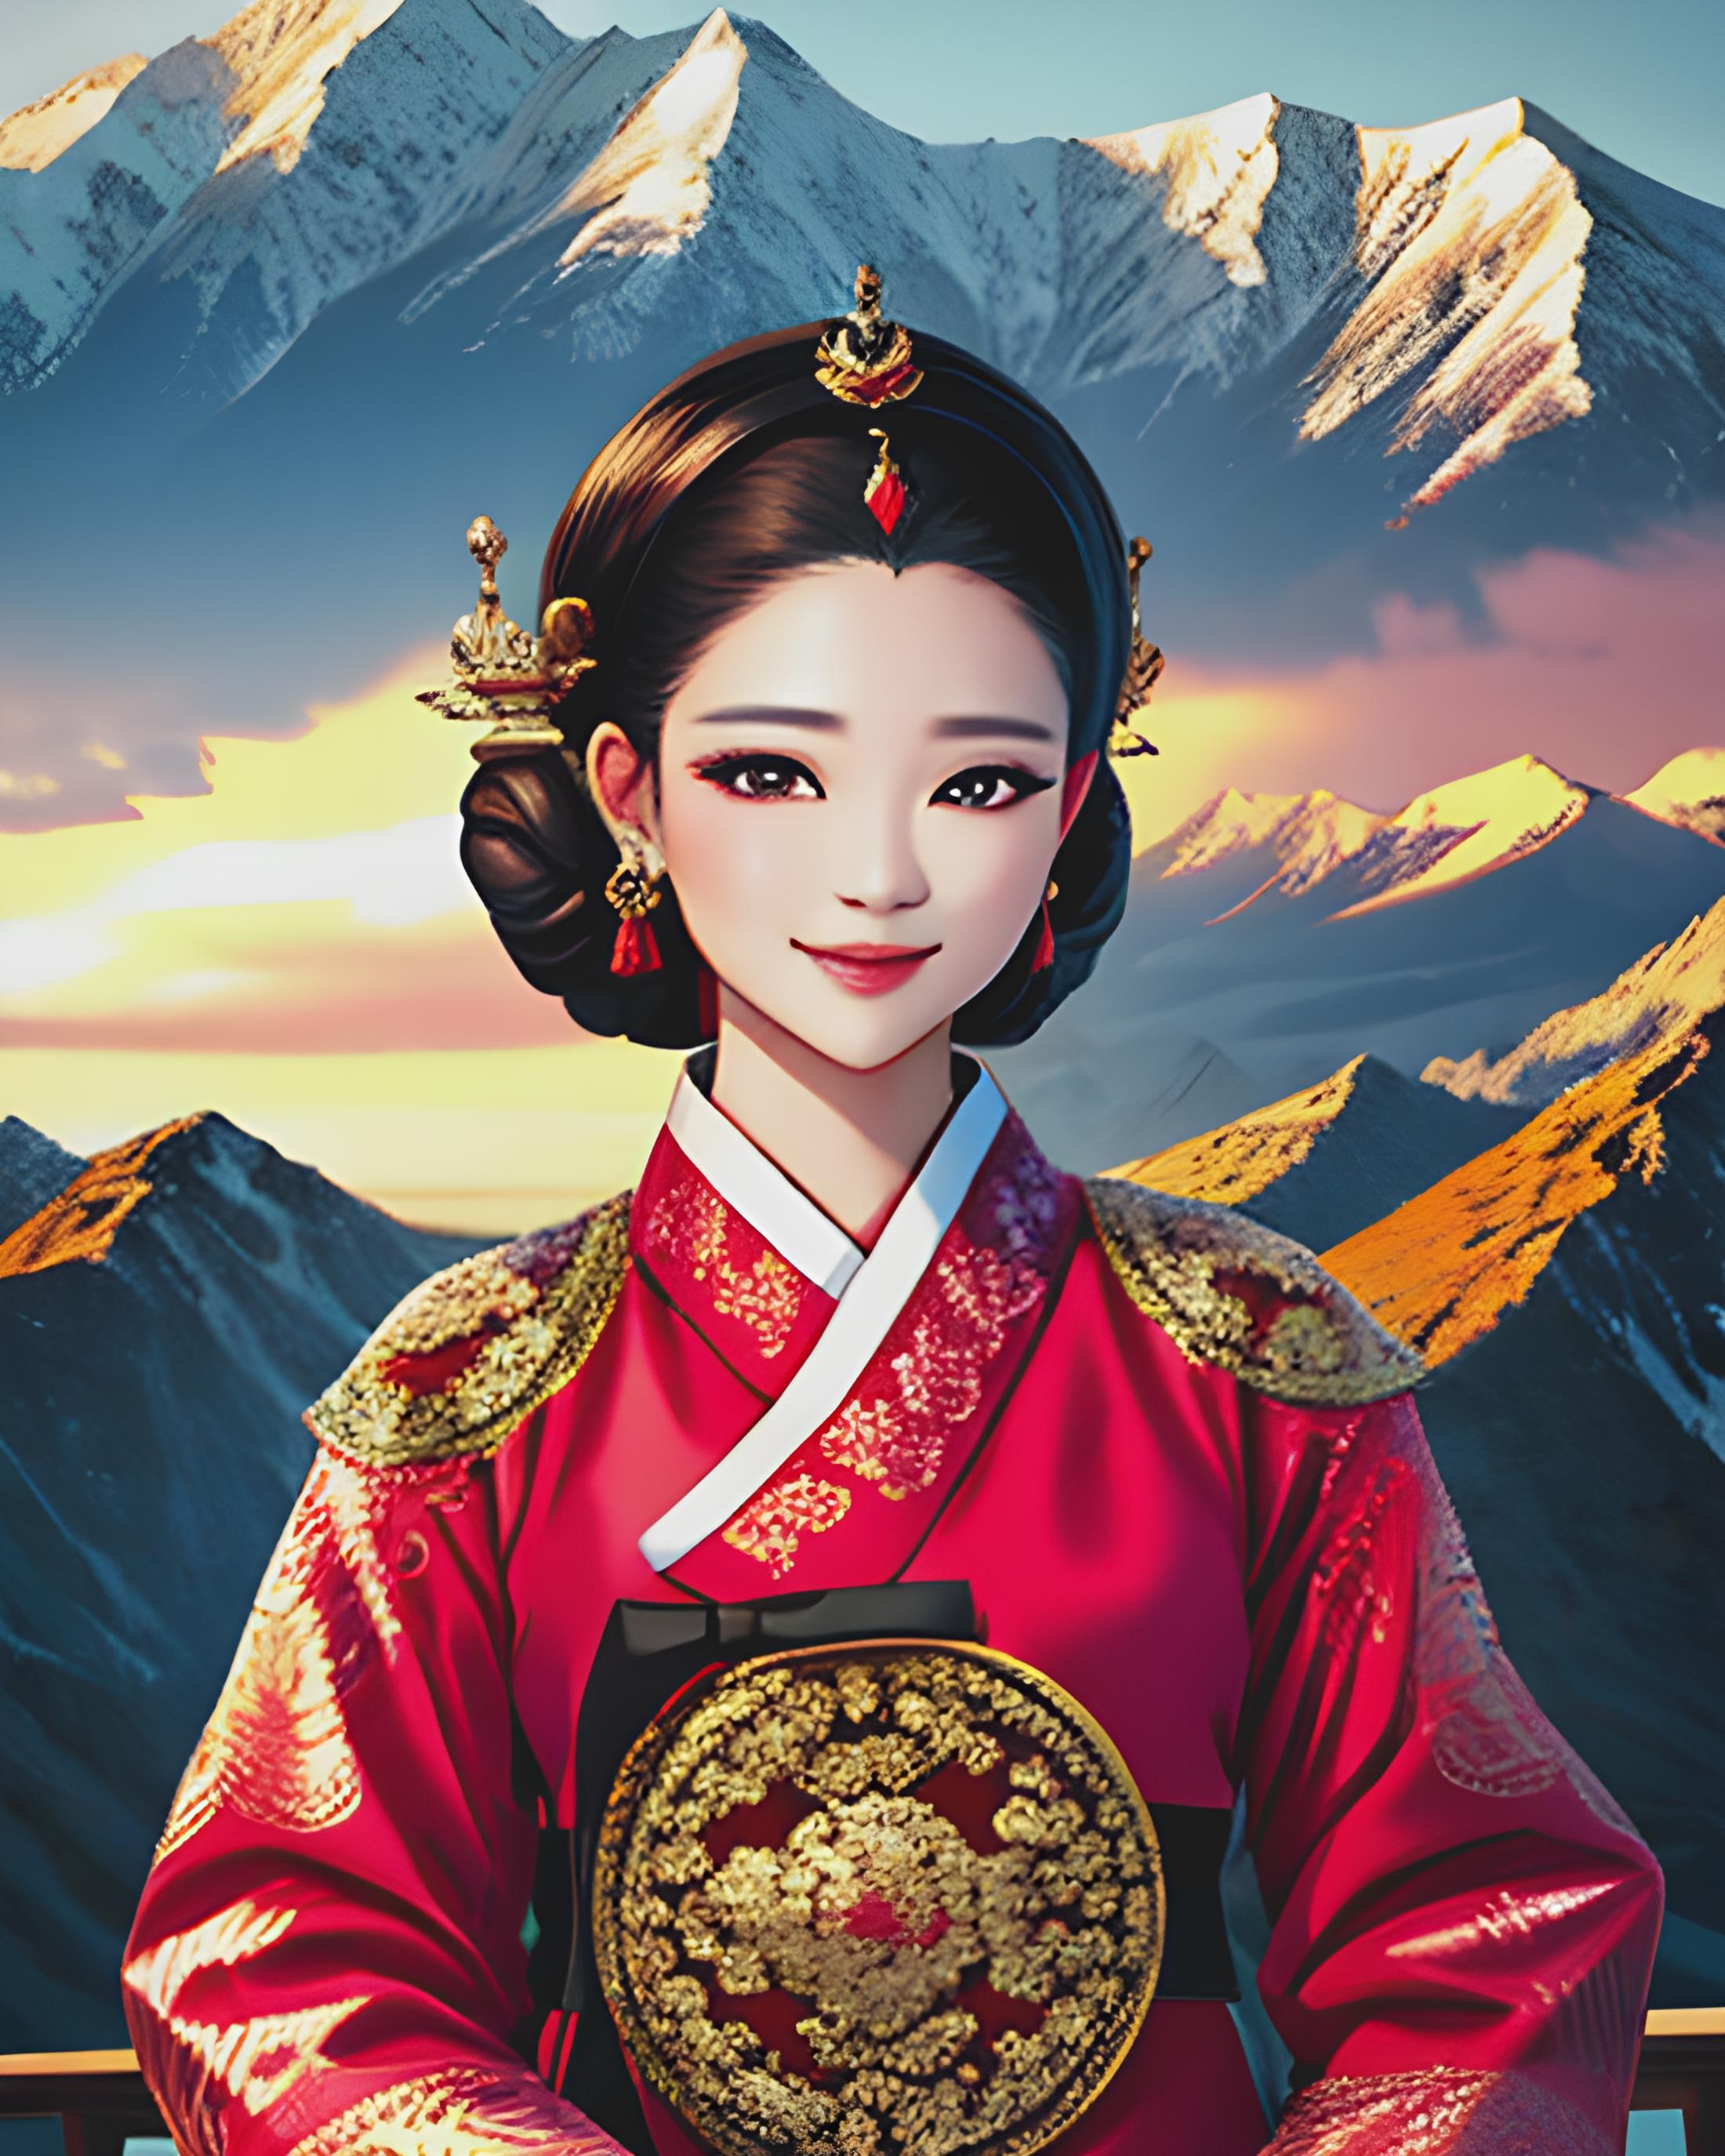 Dangui Hanbok - Joseon Era Korean Clothing image by KimiKoro